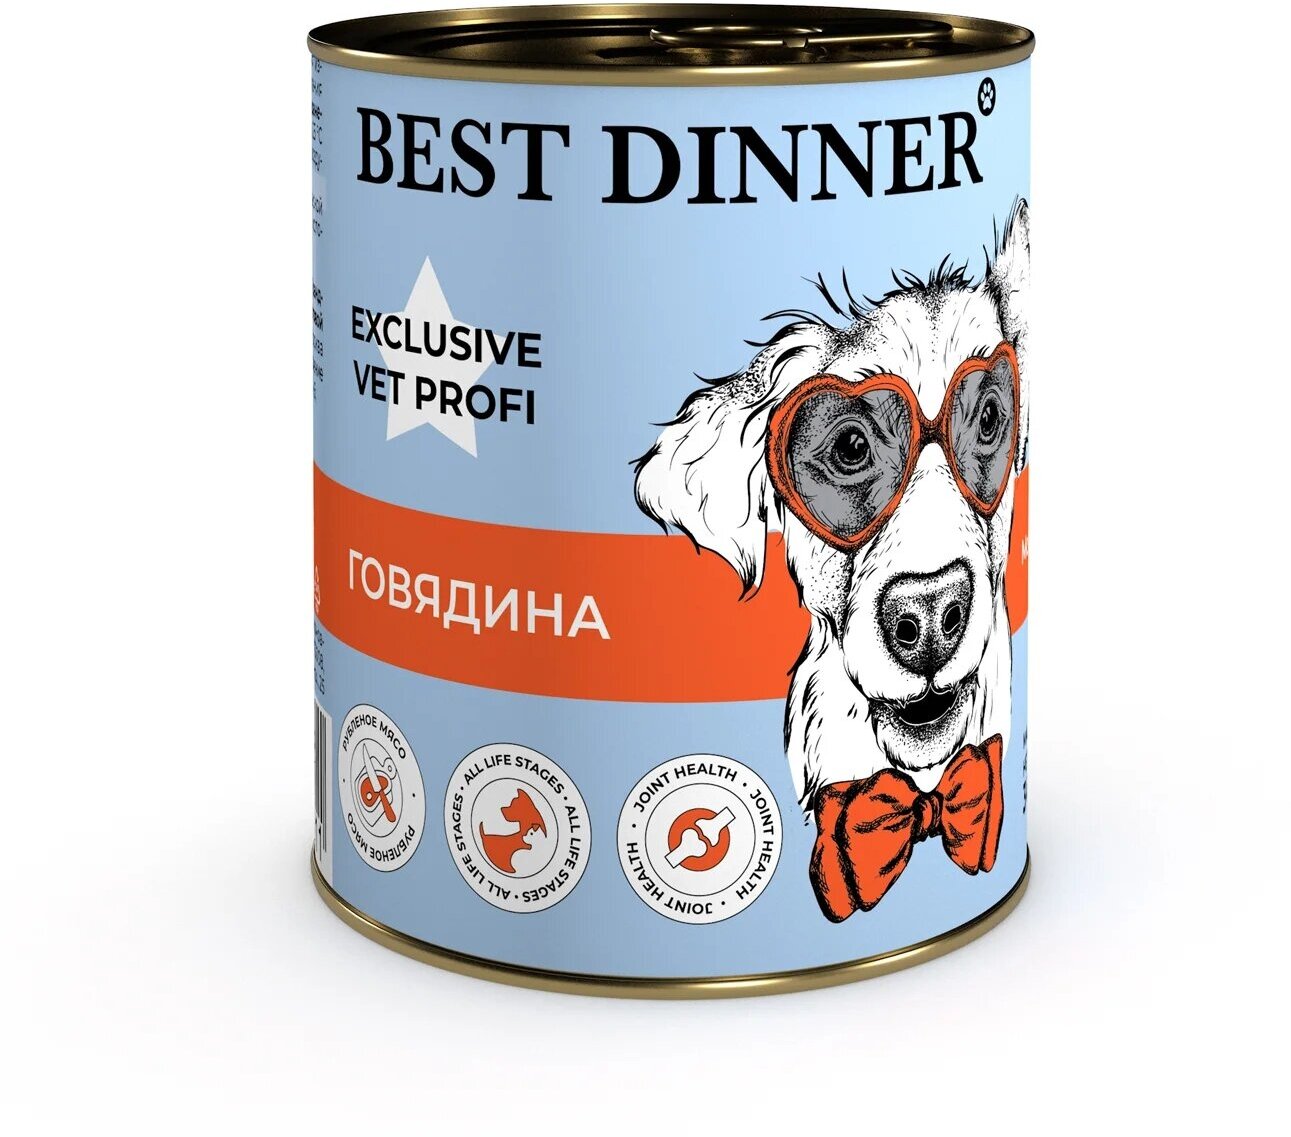 Best Dinner Vet Profi Exclusive Mobility 12шт по 340г говядина консервы для собак